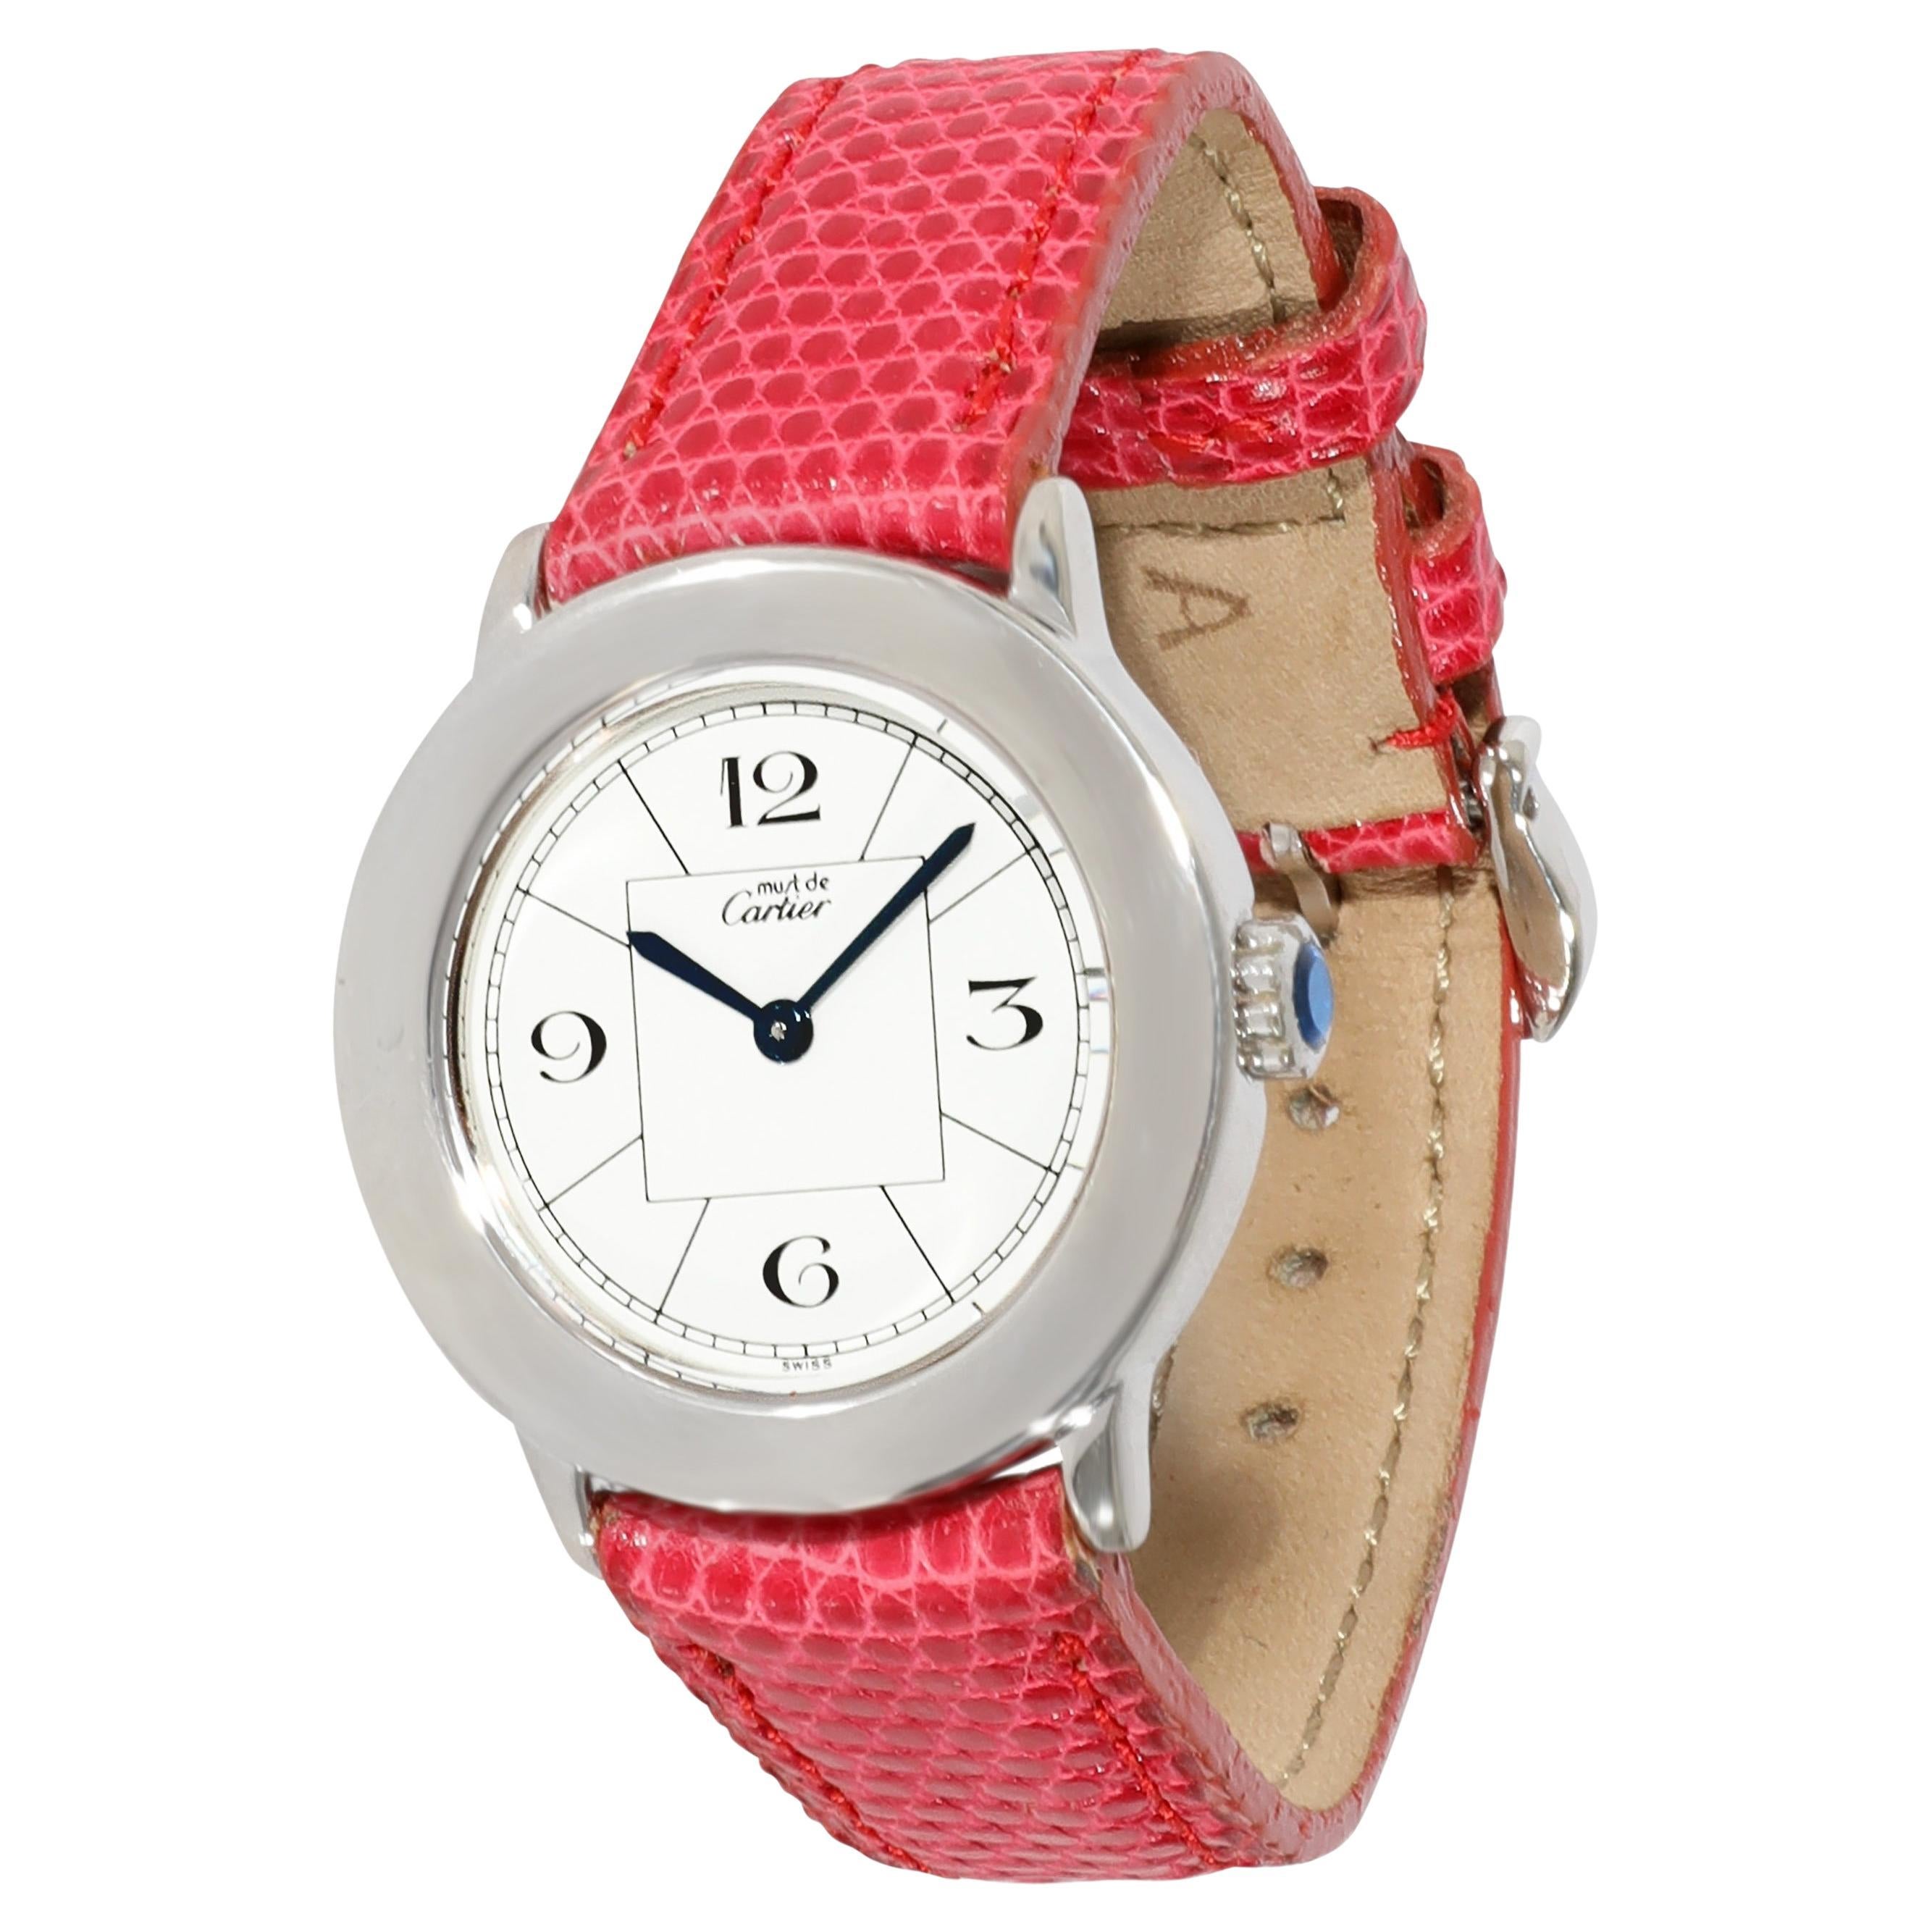 Cartier Le Must de Cartier VLC 019212 Women's Watch in Vermeil For Sale ...